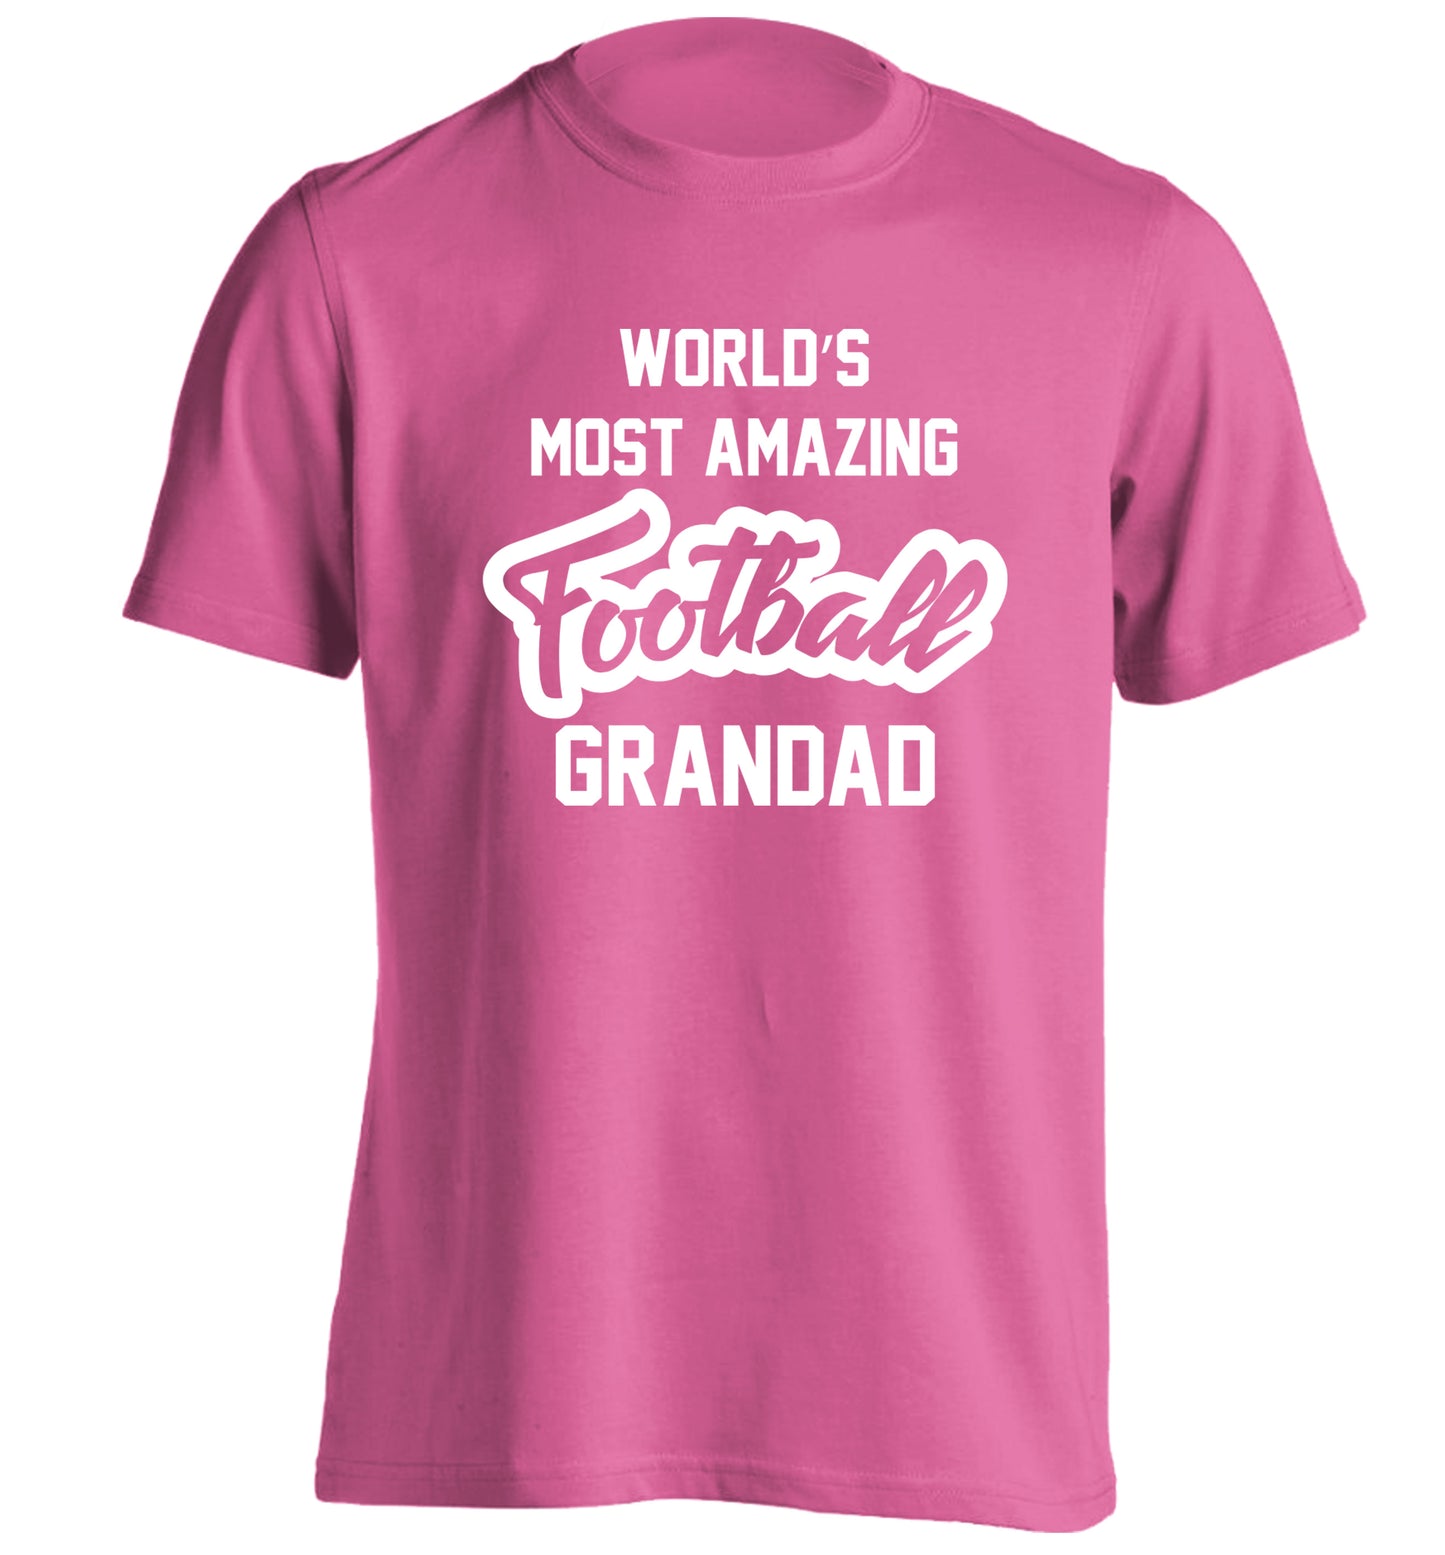 Worlds most amazing football grandad adults unisexpink Tshirt 2XL